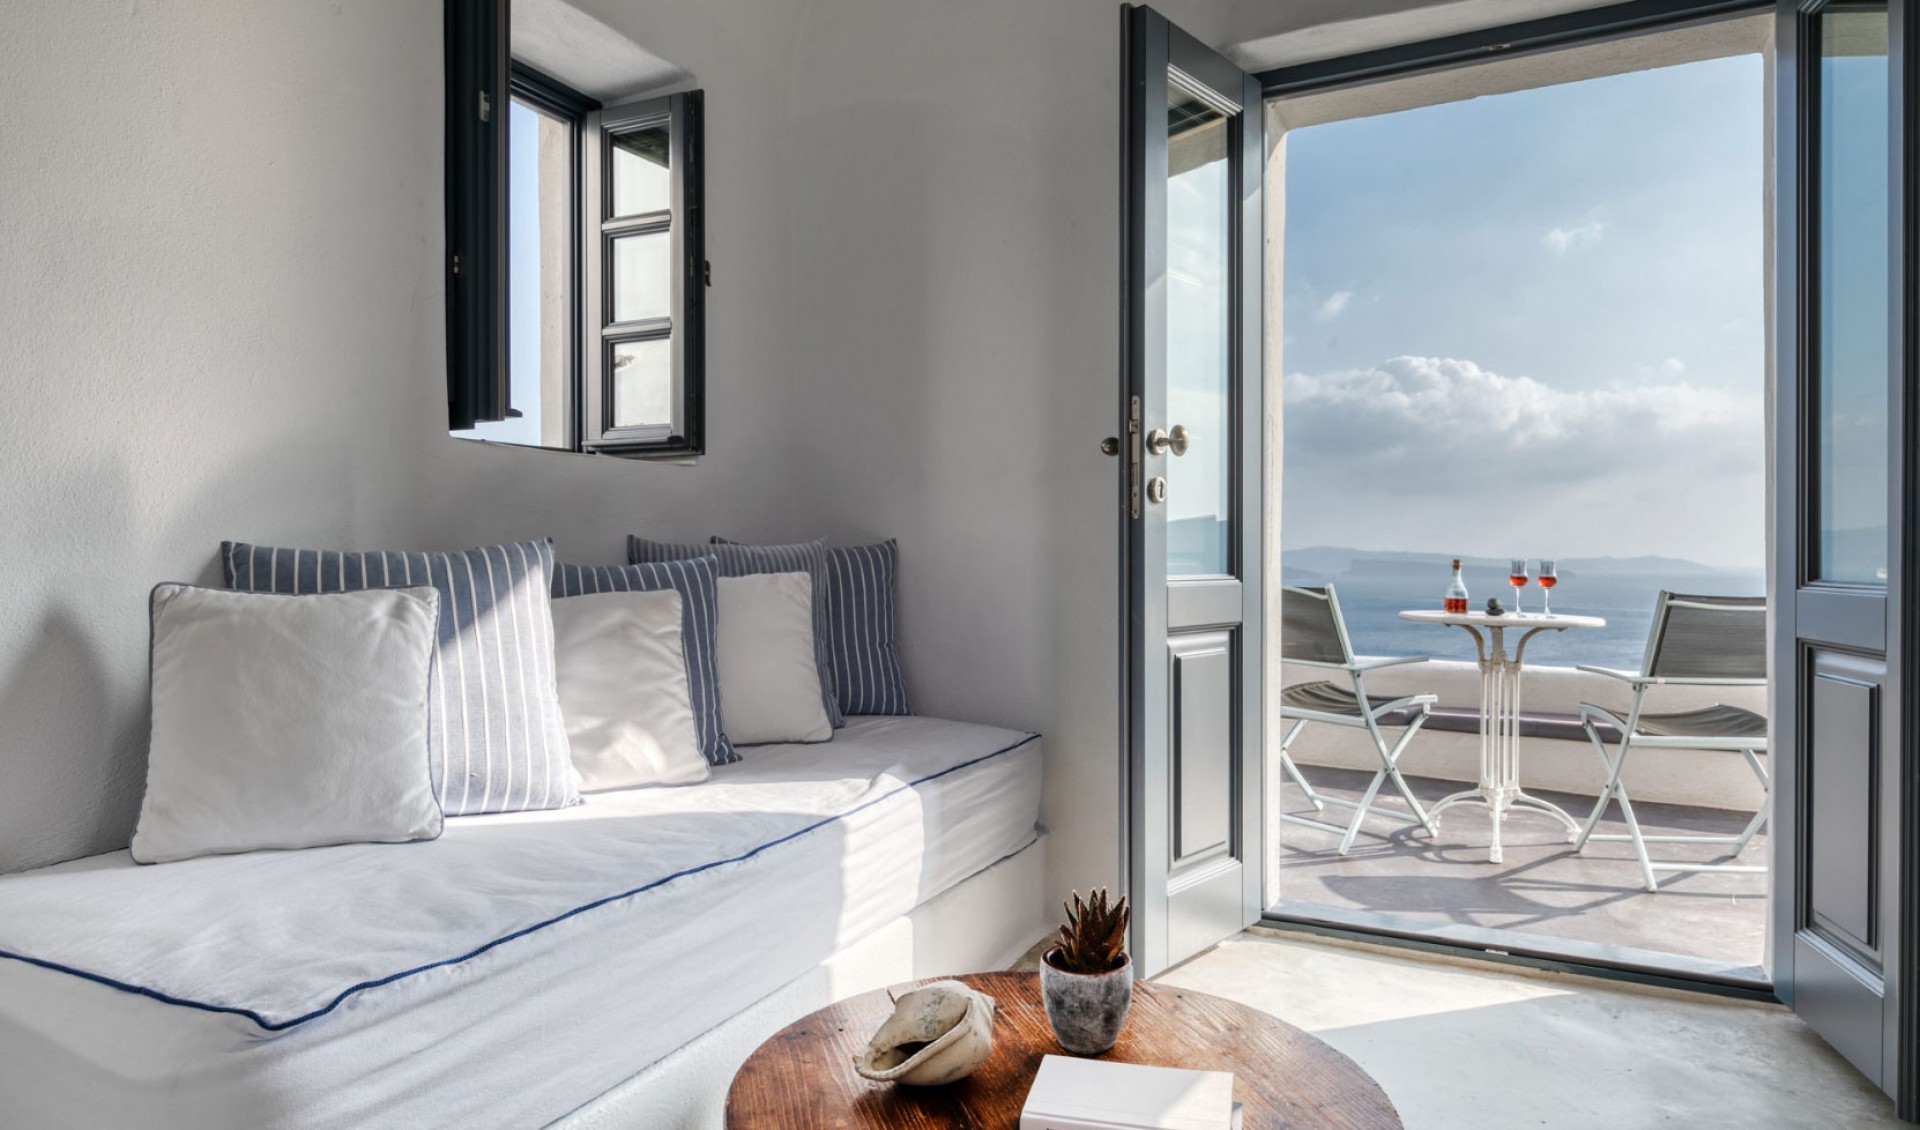 The interior of the luxury suite of Nostos Apartments in Oia Santorini